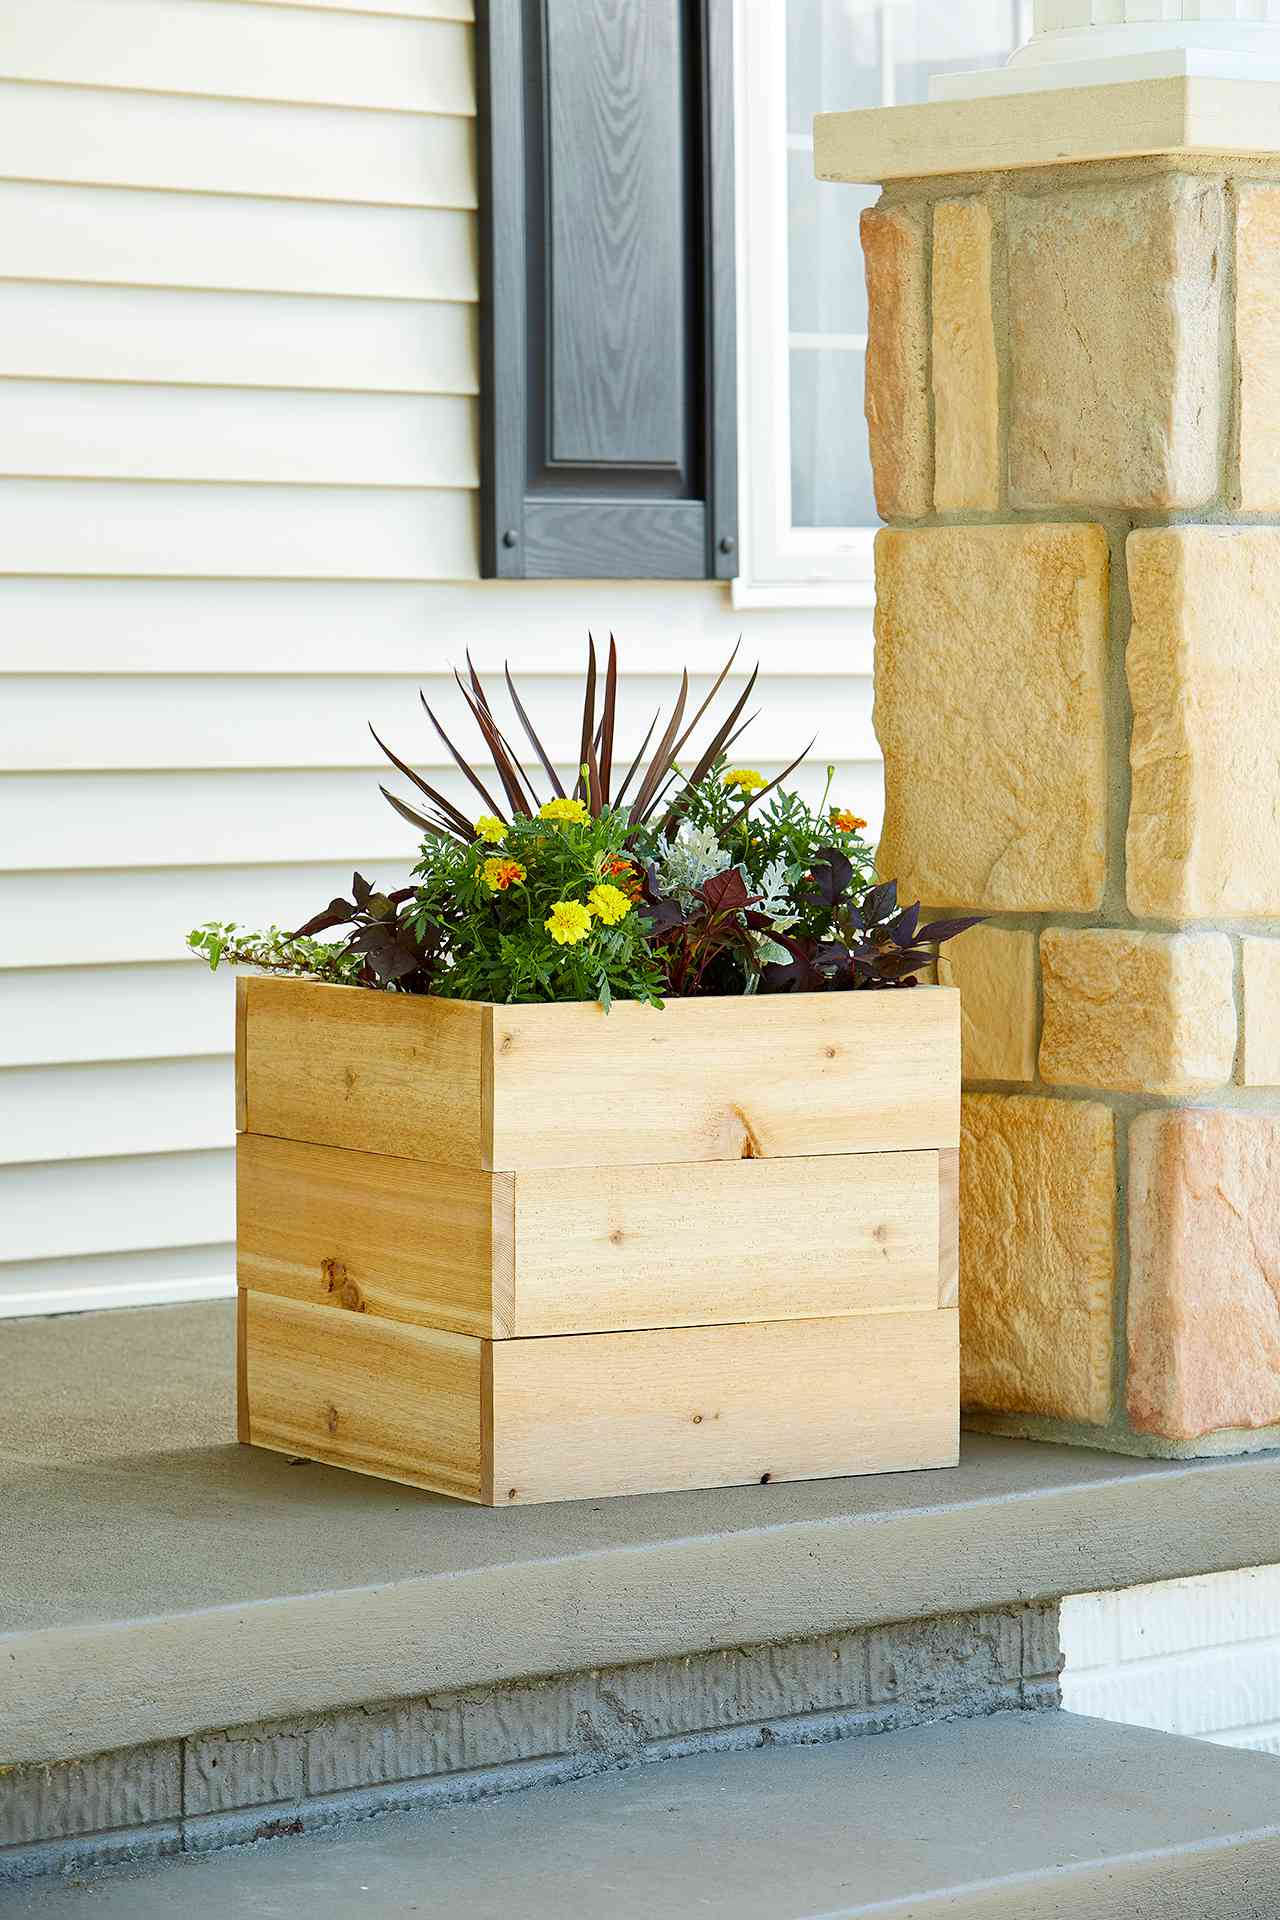 How To Build A Cedar Planter Box, How To Make A Long Wooden Planter Box